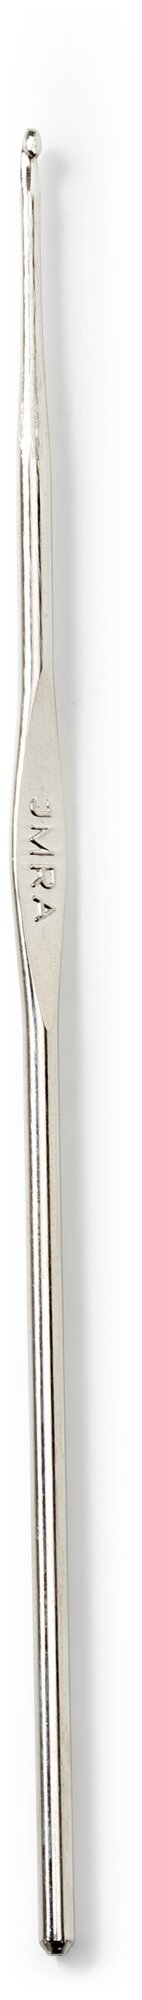 175851 Крючок IMRA для тонкой пряжи без ручки, сталь, с направляющей площадью 0,6мм Prym - фото №3